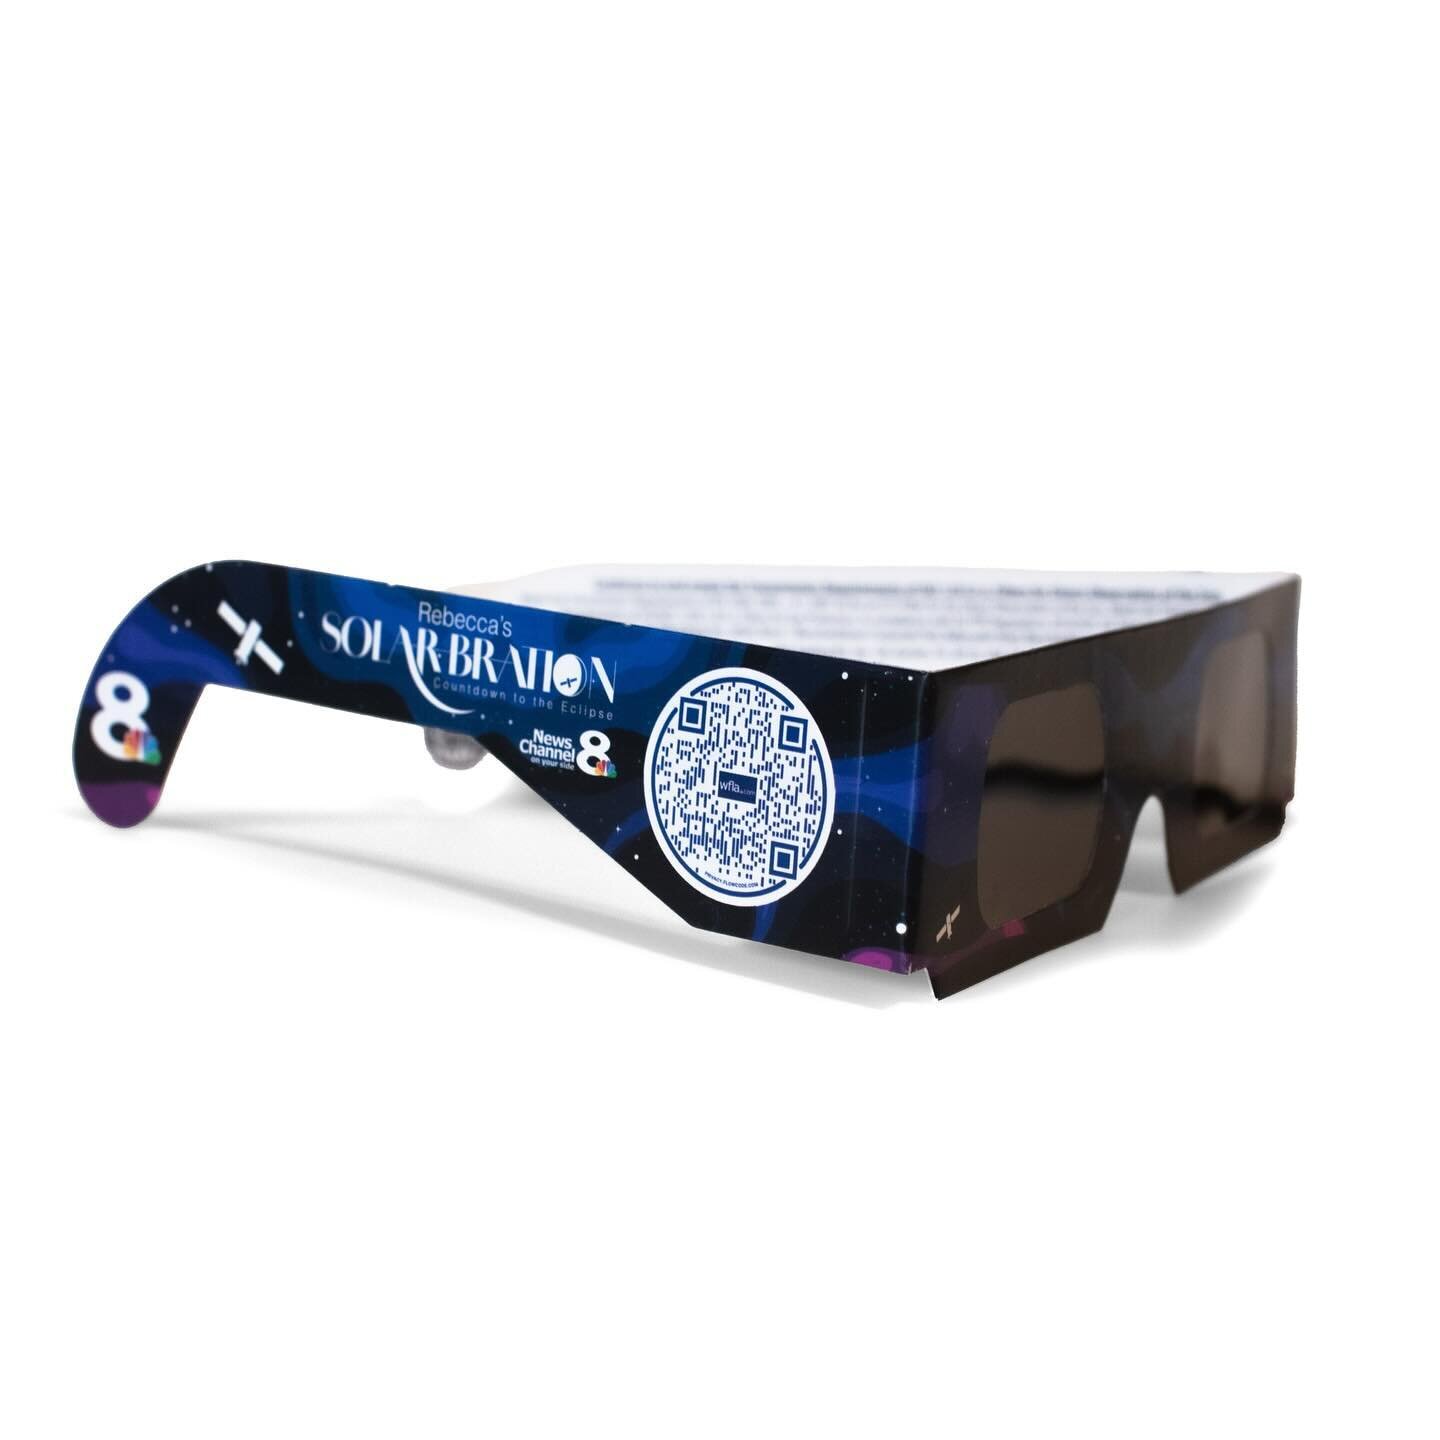 Protect those eyes 🕶️

//Nexstar Media Group //NC8 //WFLA //Segment Logo &amp; Look //Solar Eclipse Glasses